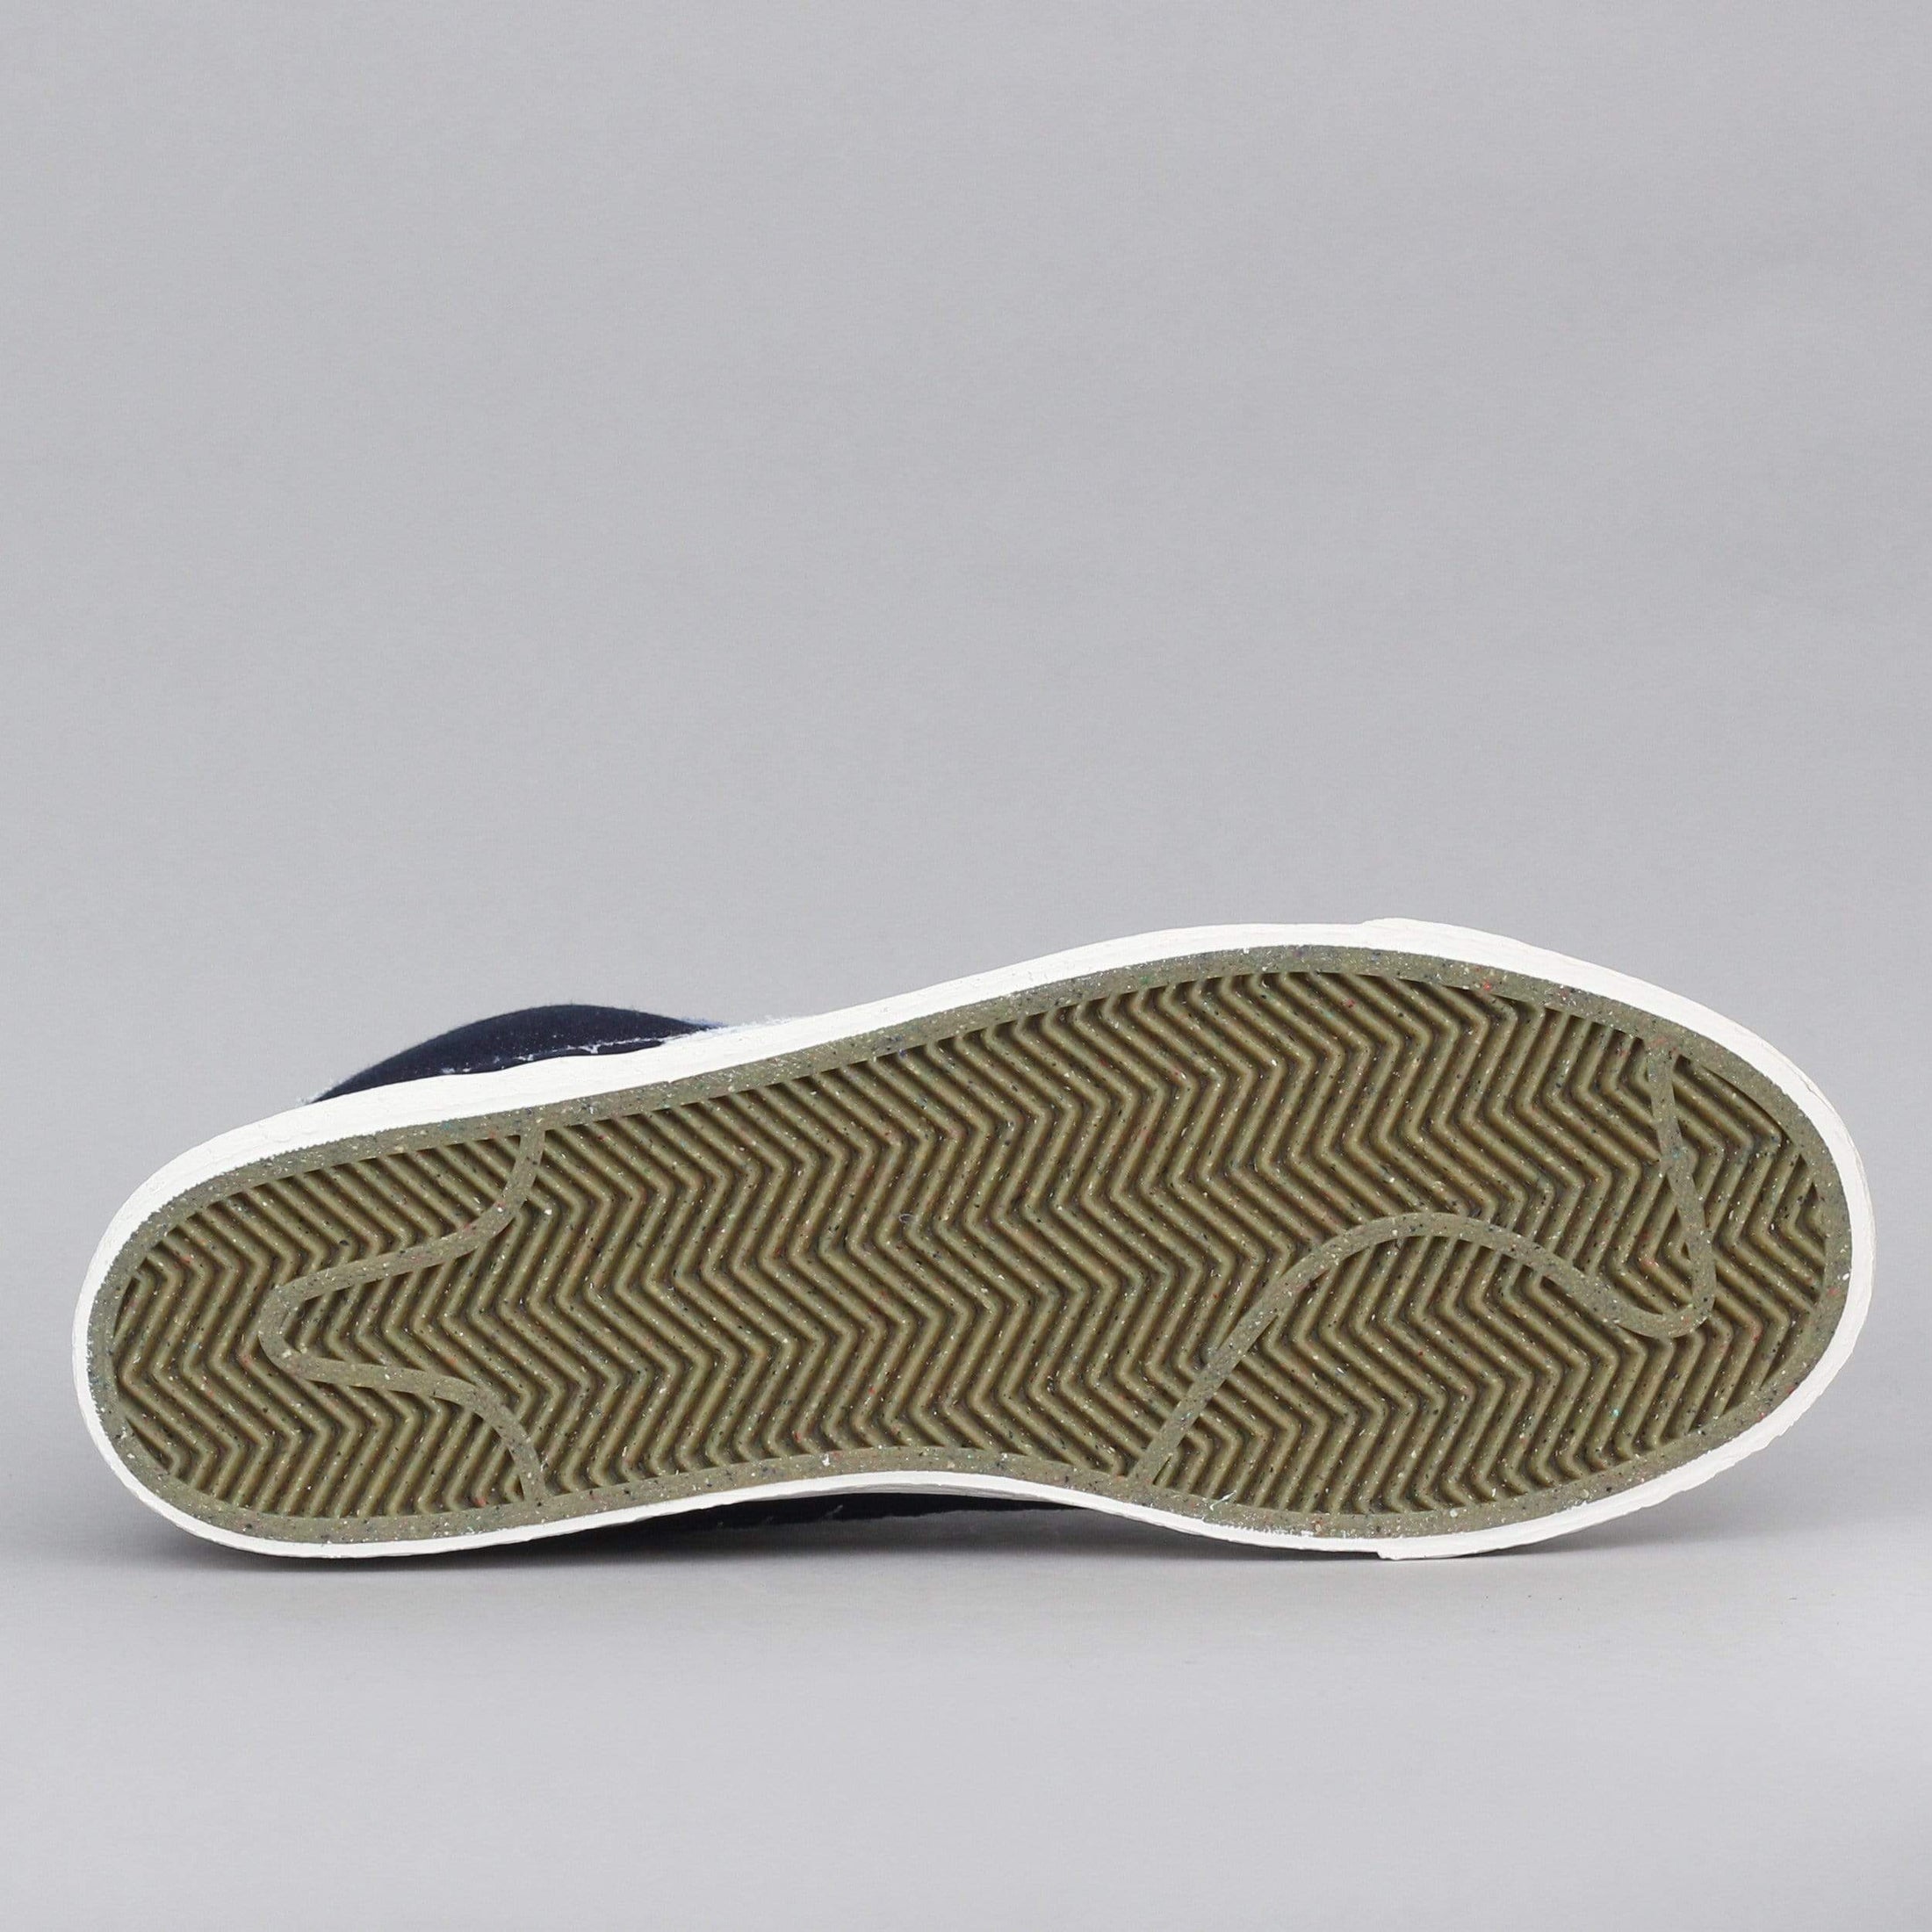 Nike SB Blazer Mid Premium Shoes Mystic Navy / Sail - Sail - Gum Light Brown